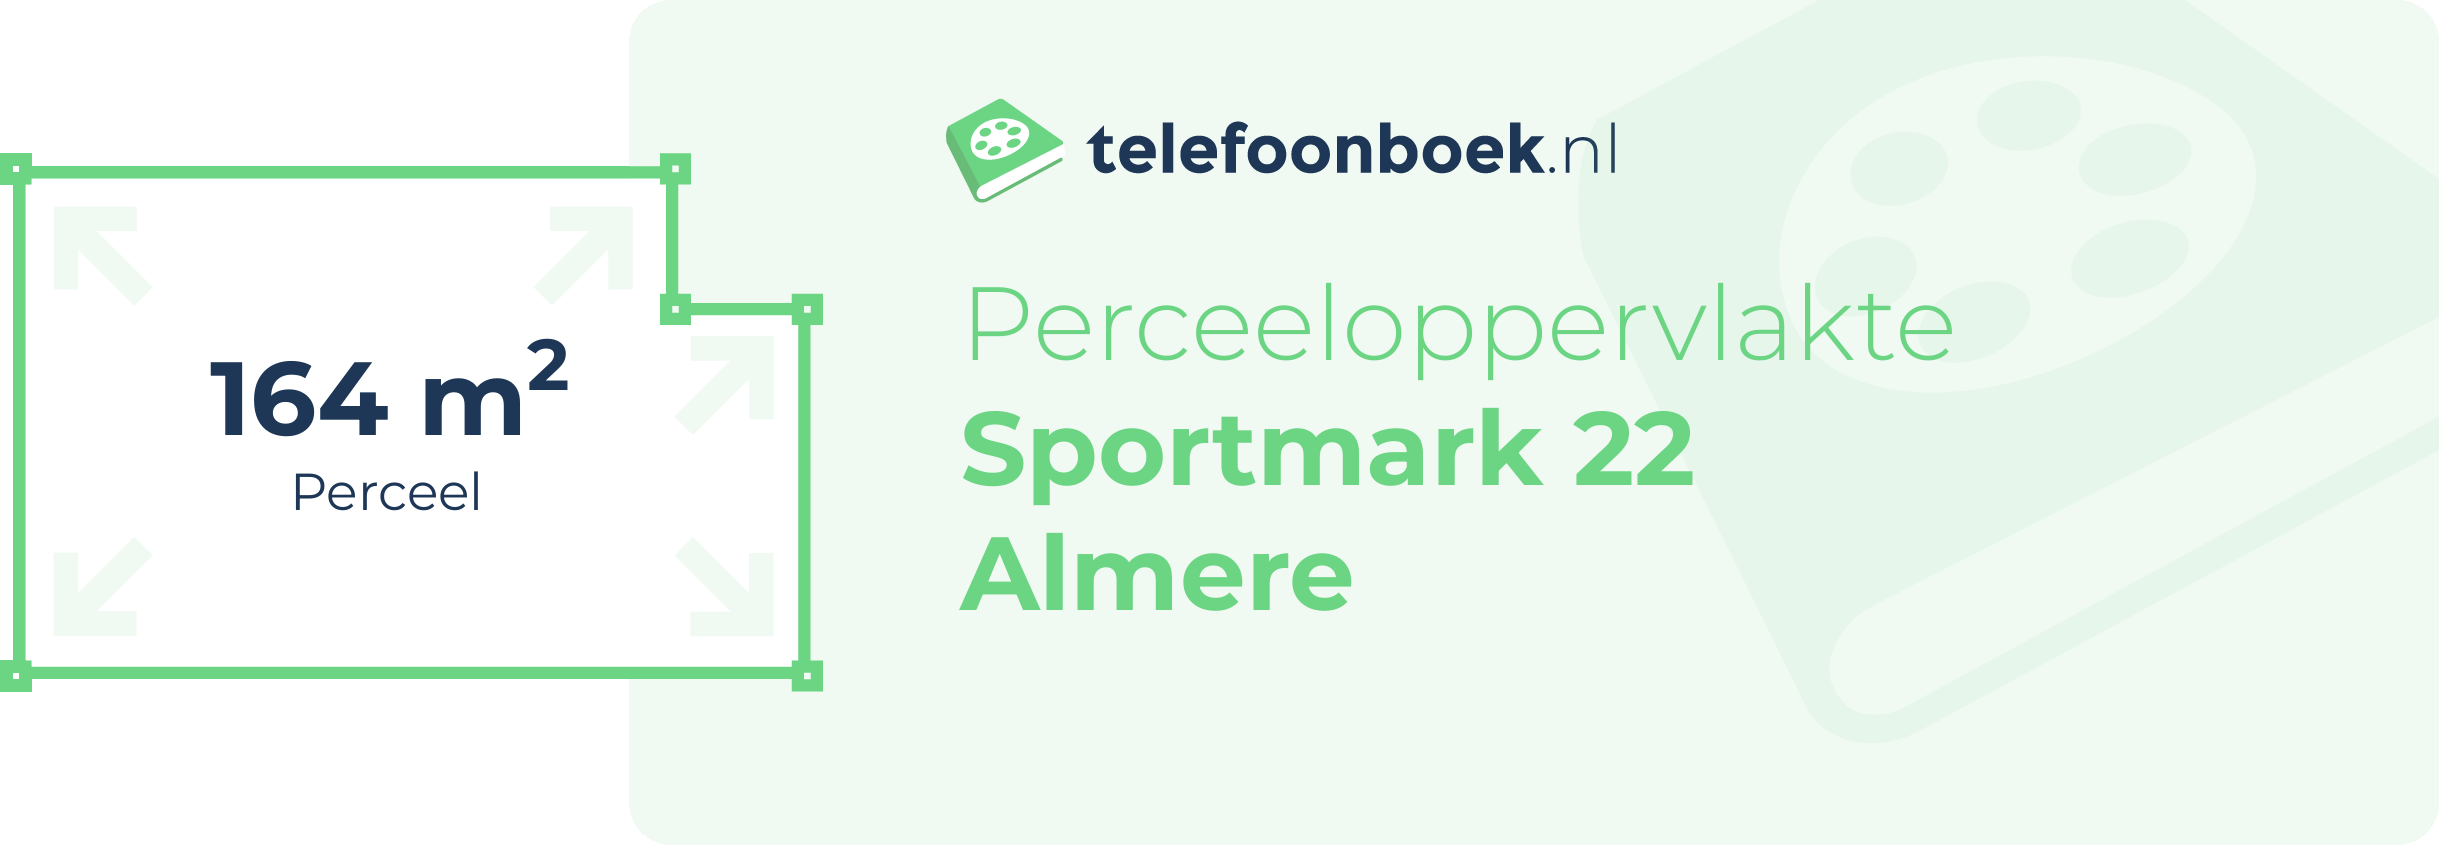 Perceeloppervlakte Sportmark 22 Almere